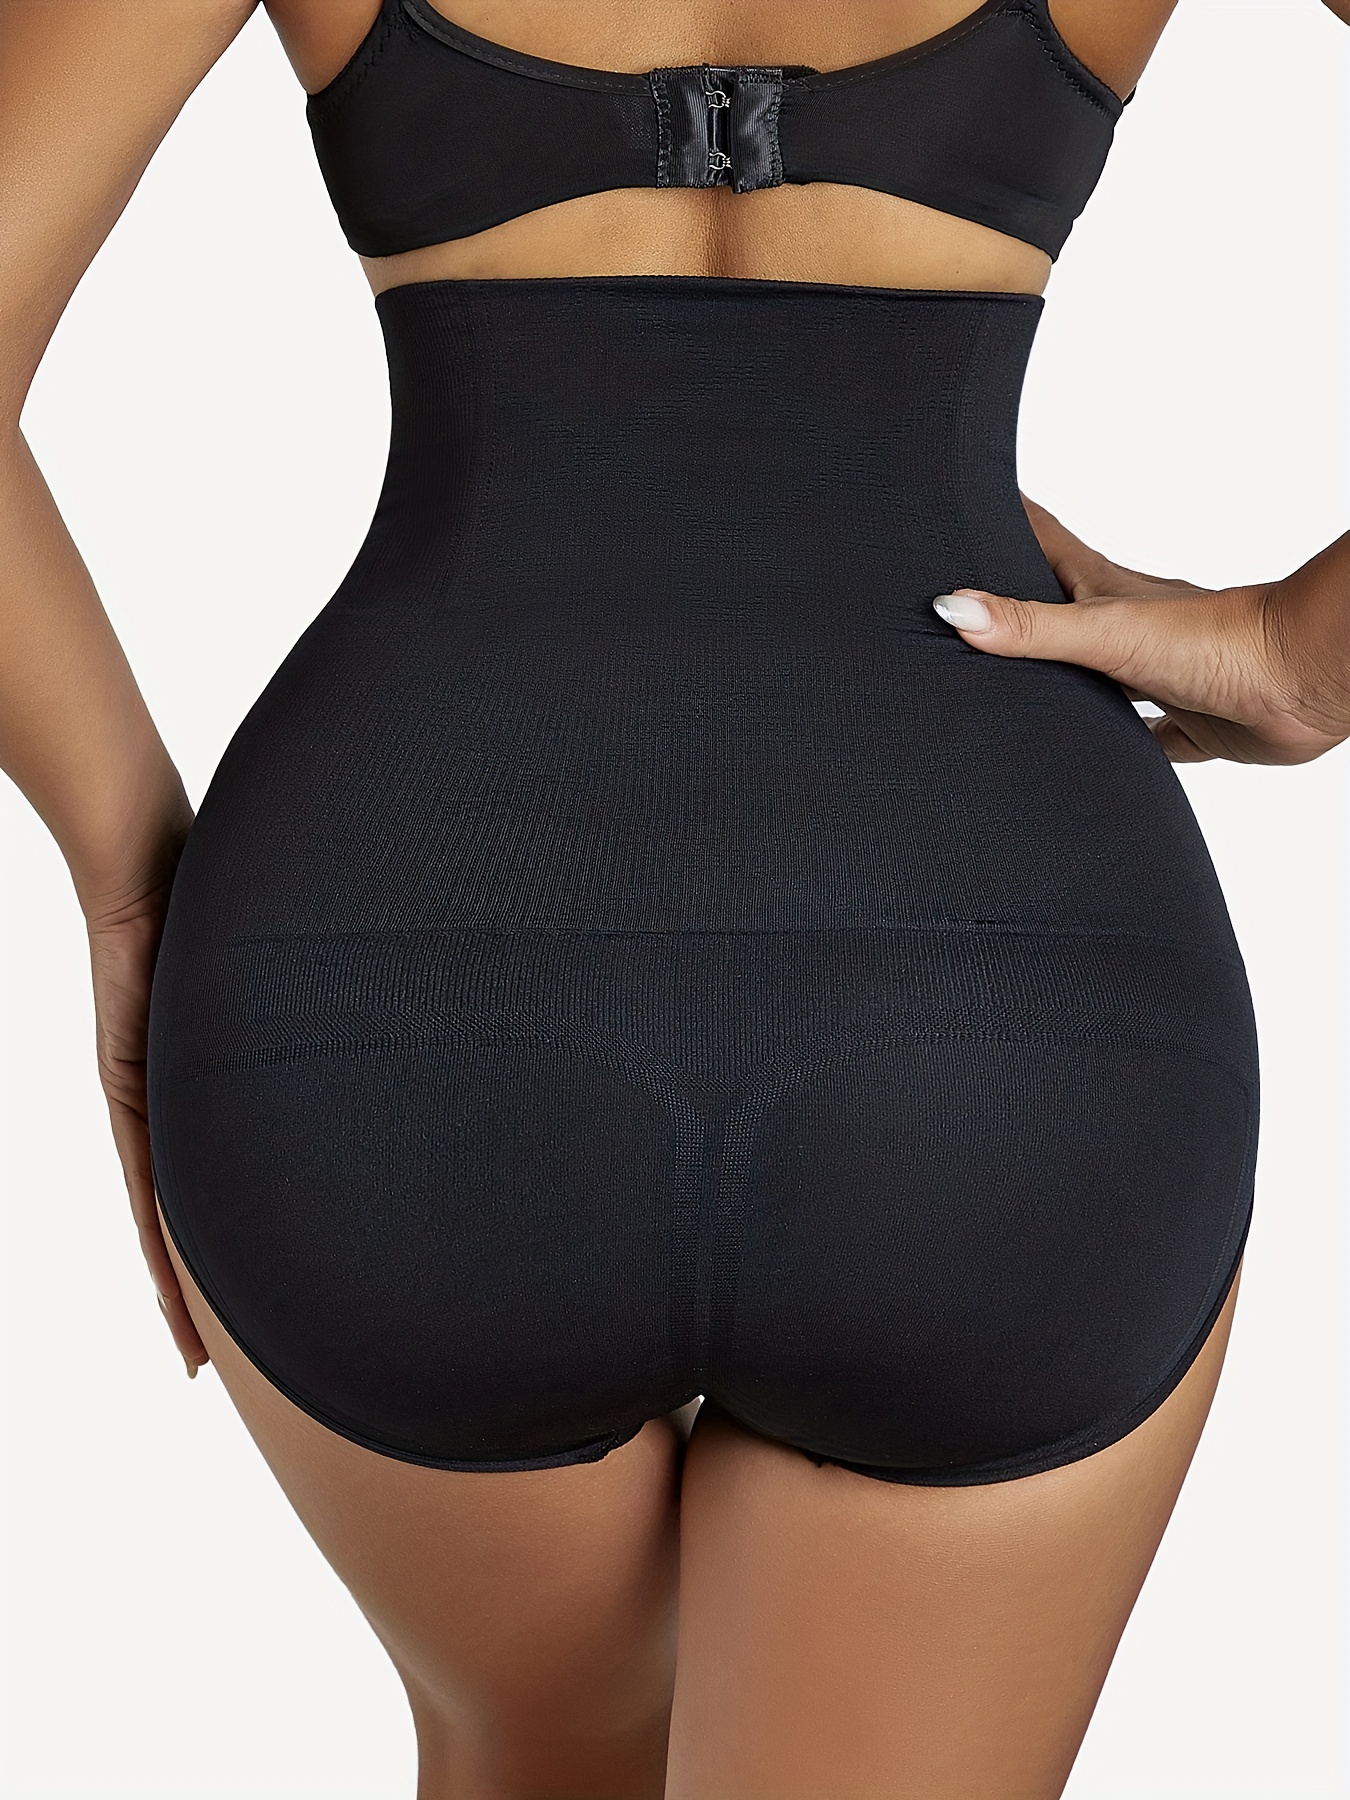 Buy Women's High Waist Body Shaper Seamless Lifte Tummy Control